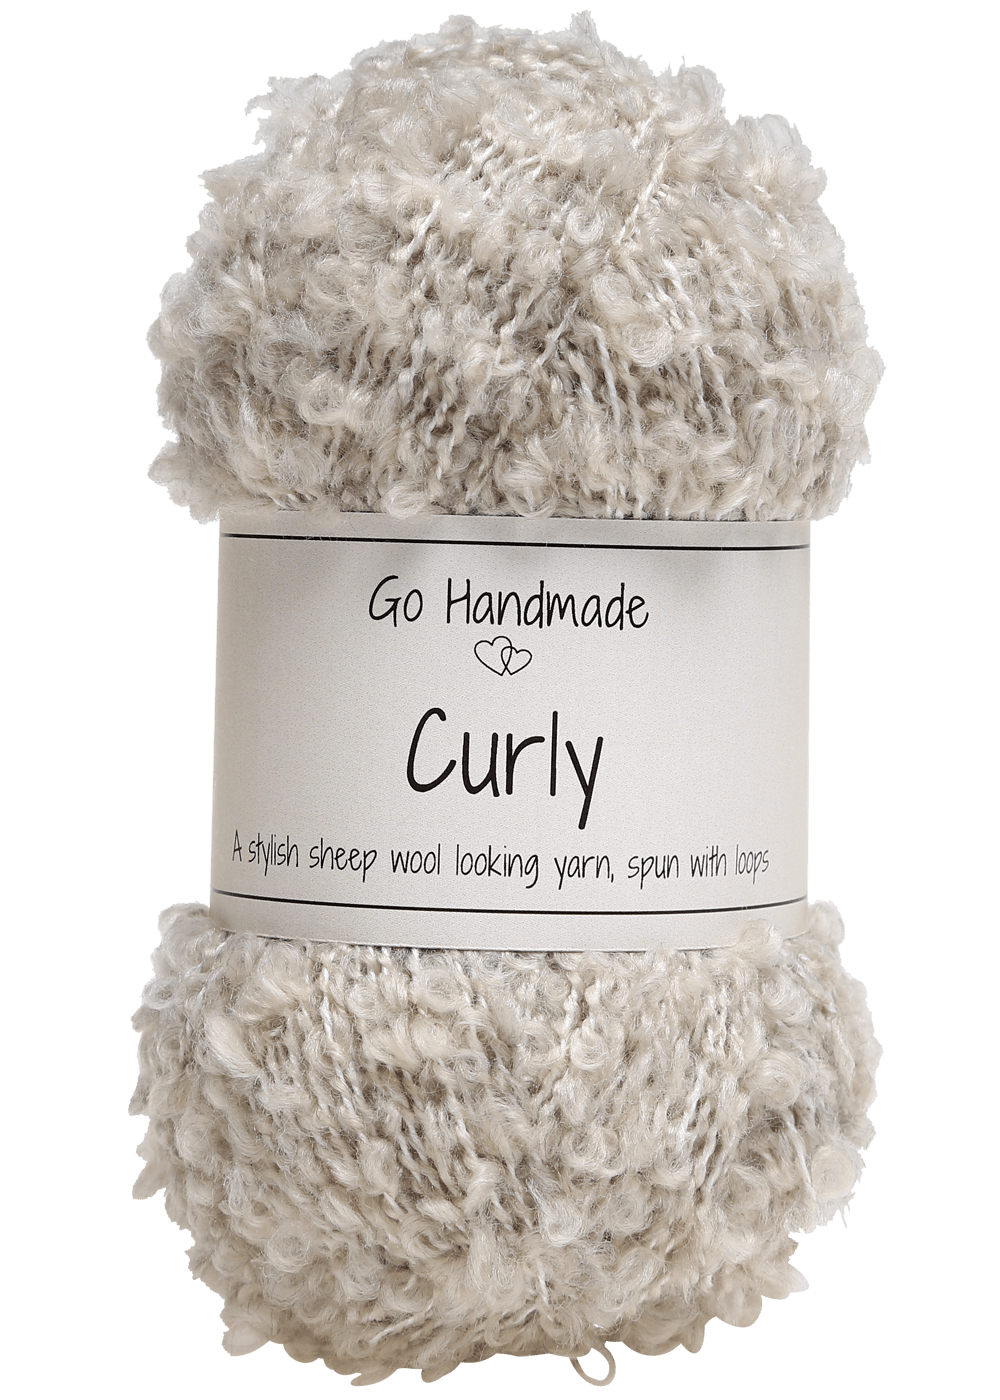 Go Handmade Curly - Light grey